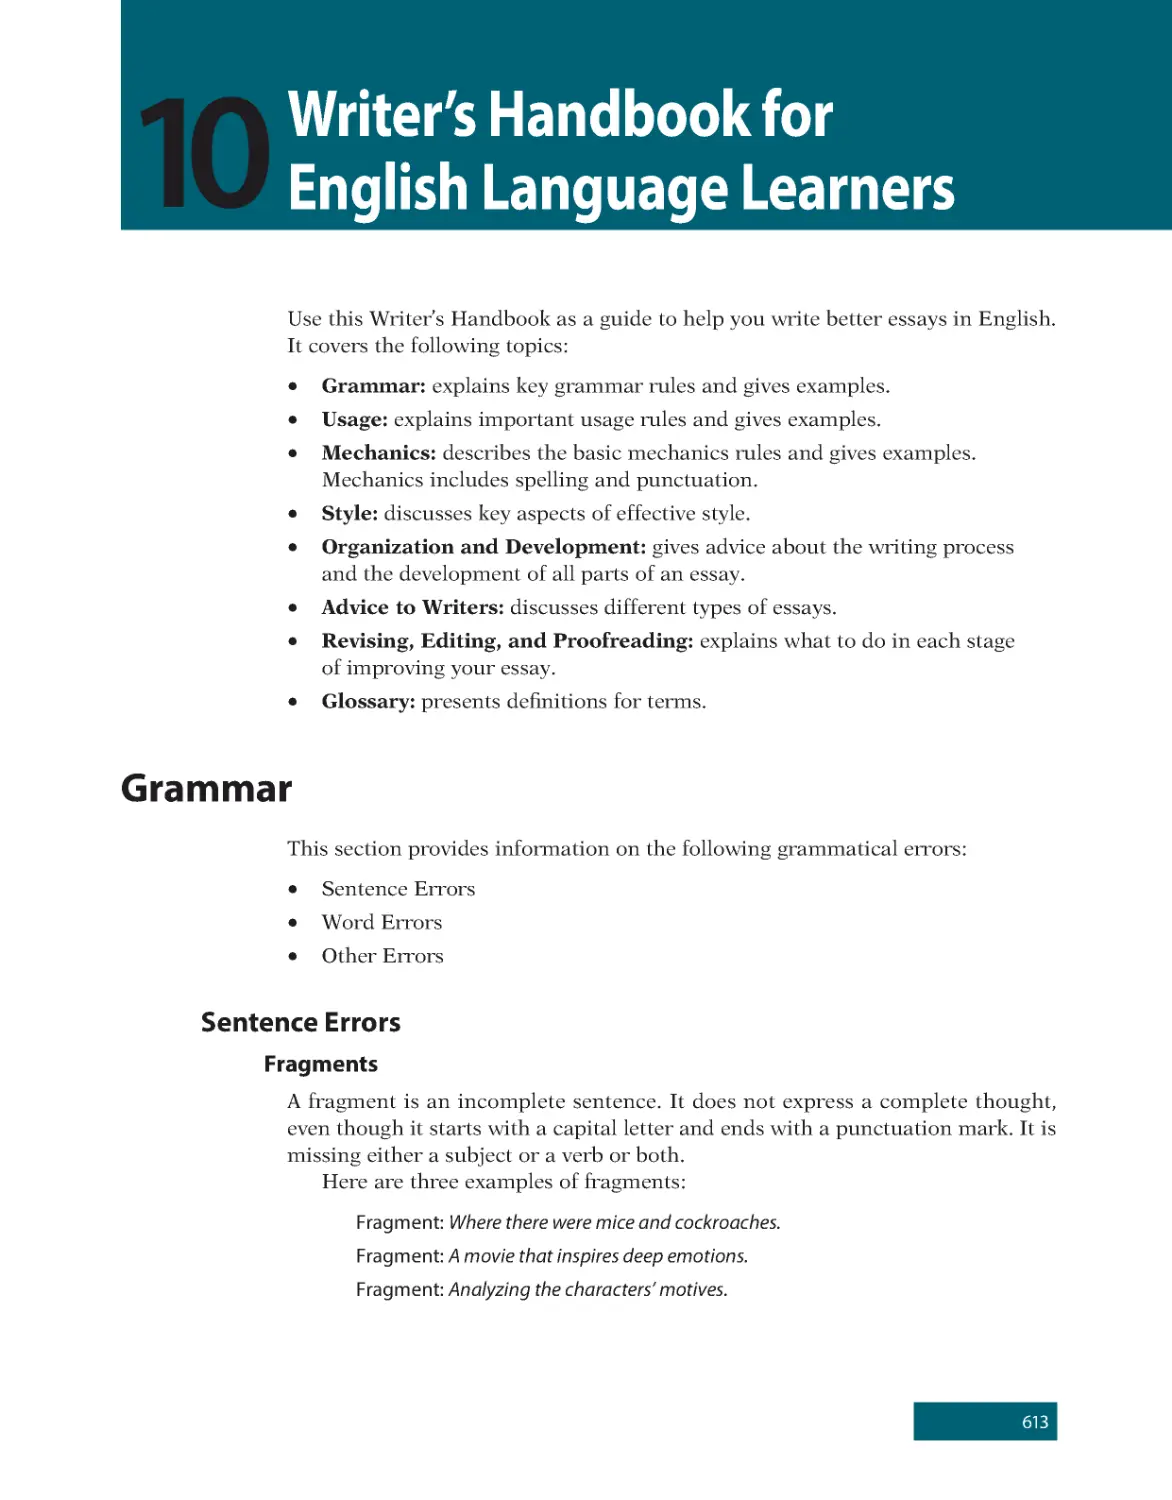 10 Writer’s Handbook for English Language Learners